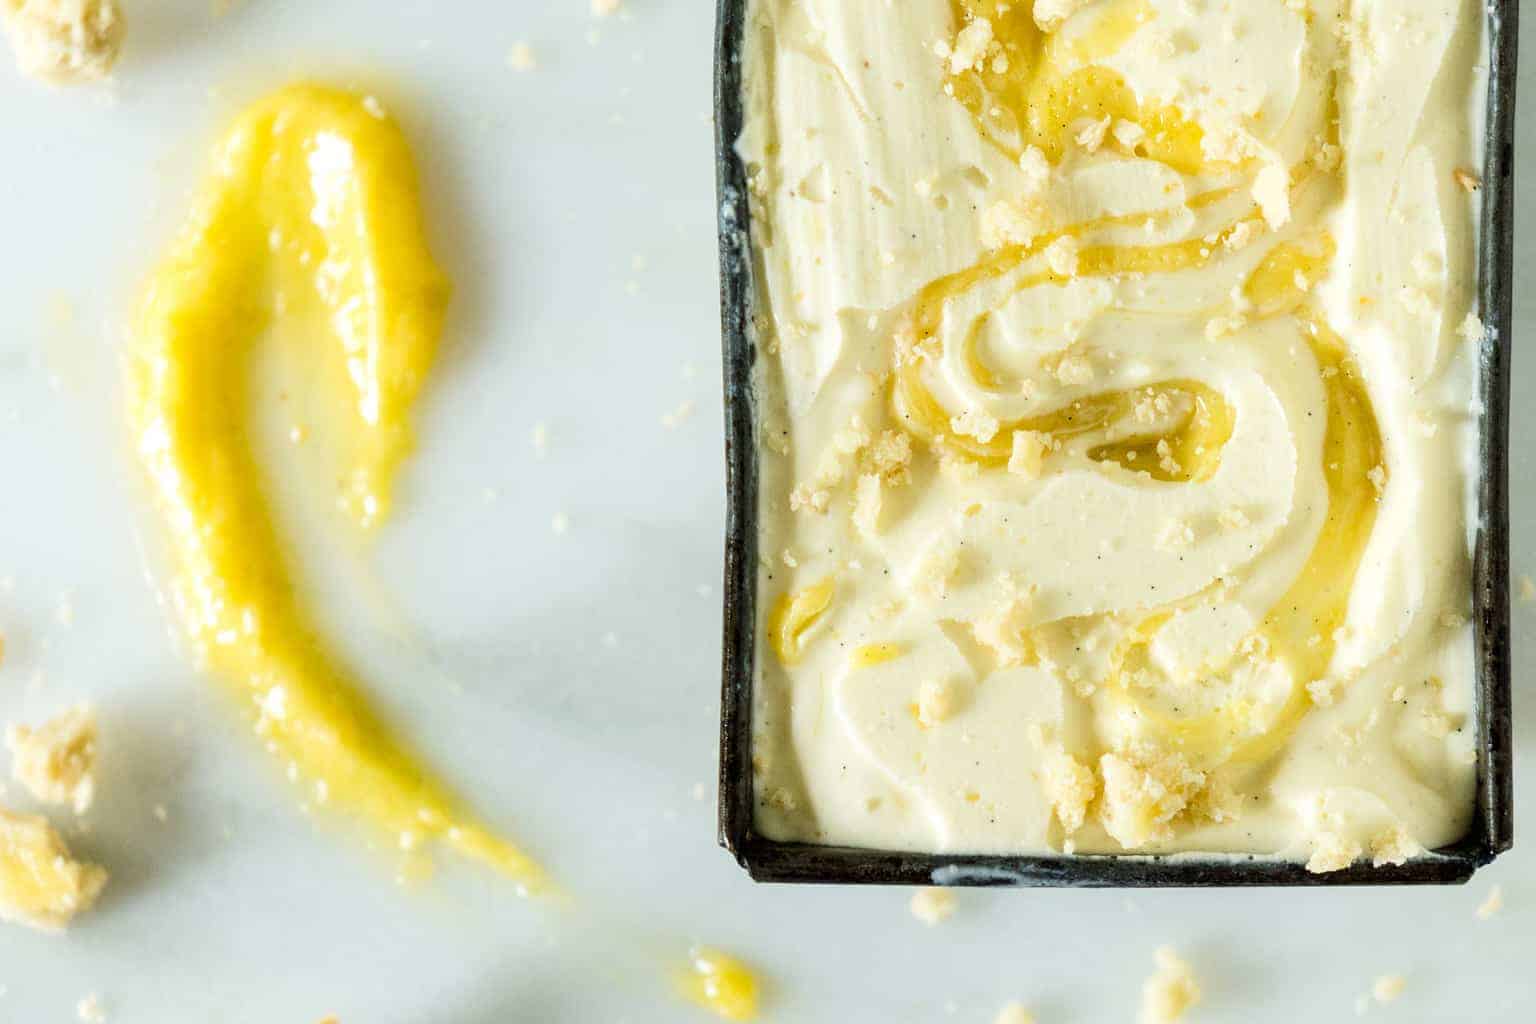 Overhead view of limoncello gelato with a vanilla lemon curd swirl.